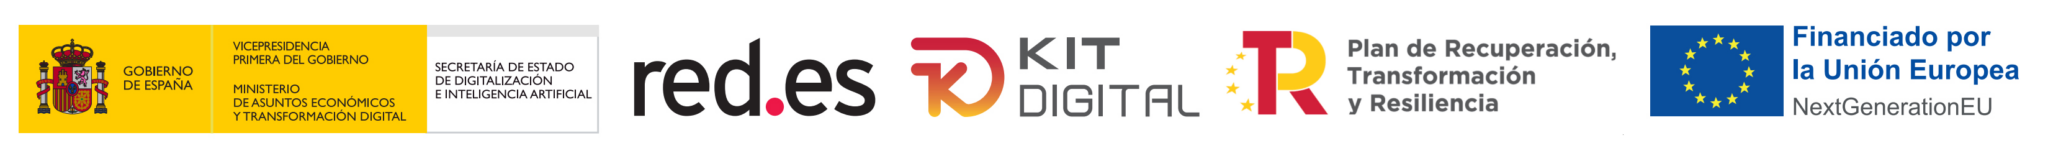 logos del kit digital